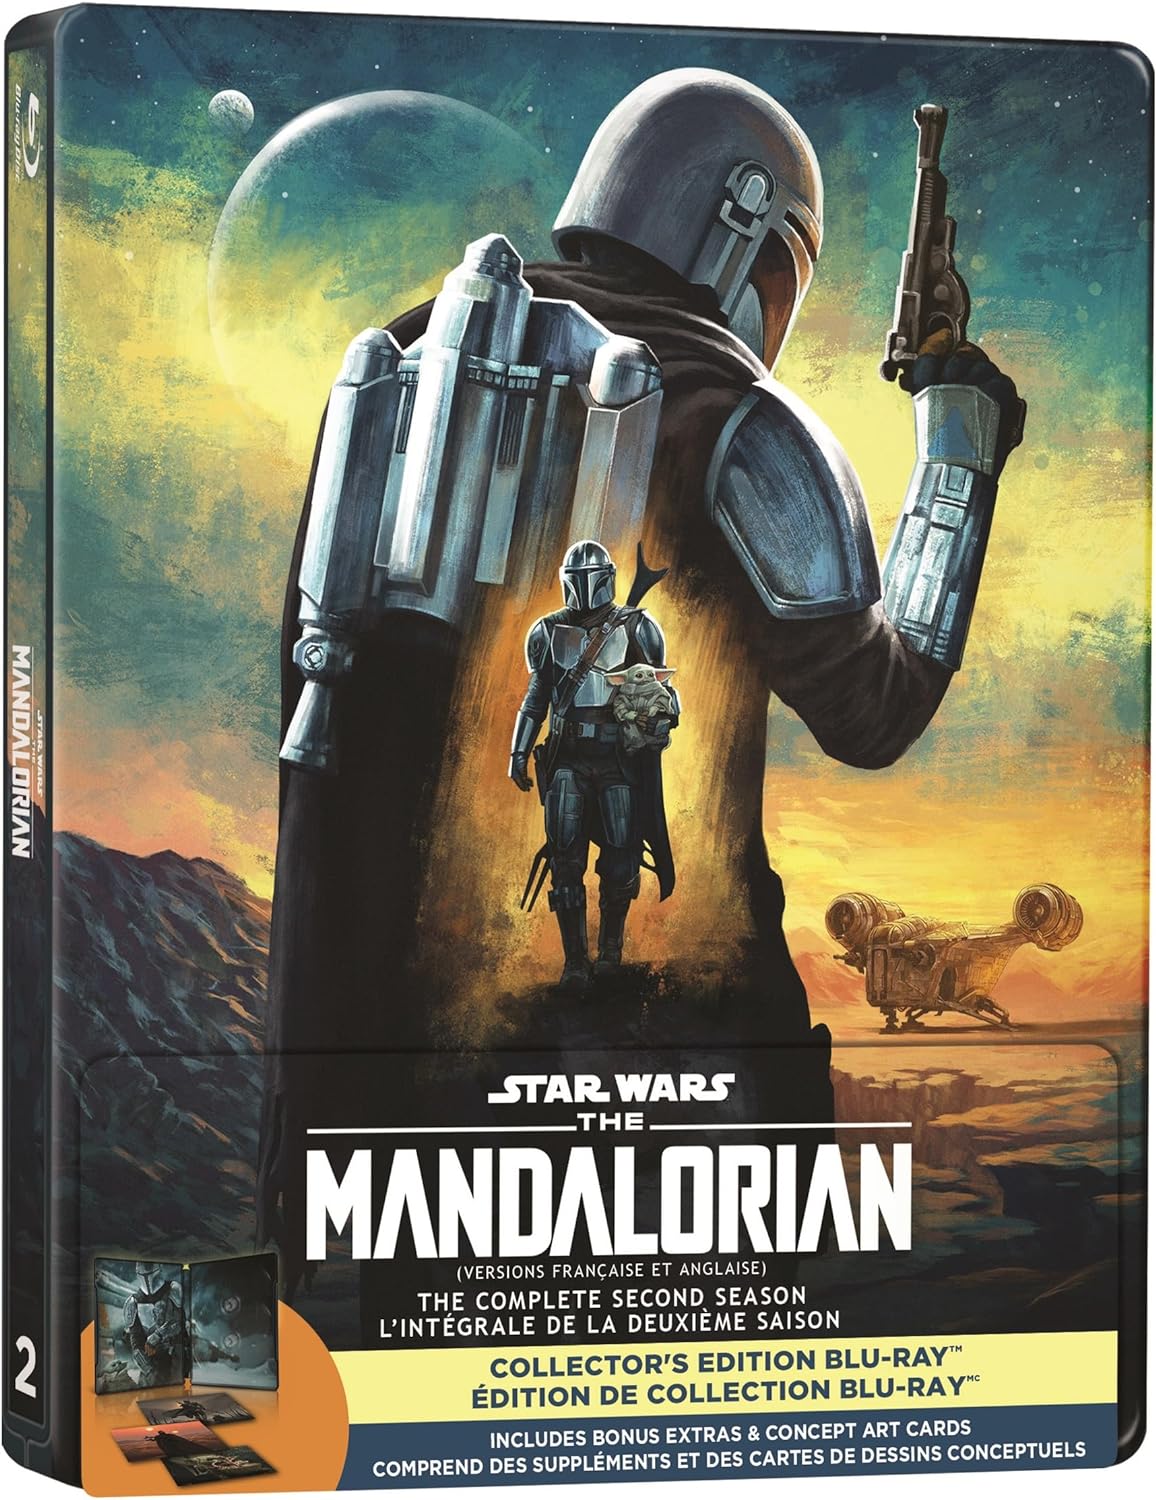 Star Wars/Mandalorian, The - Season 2 (Limited Steelbook) [BluRay]